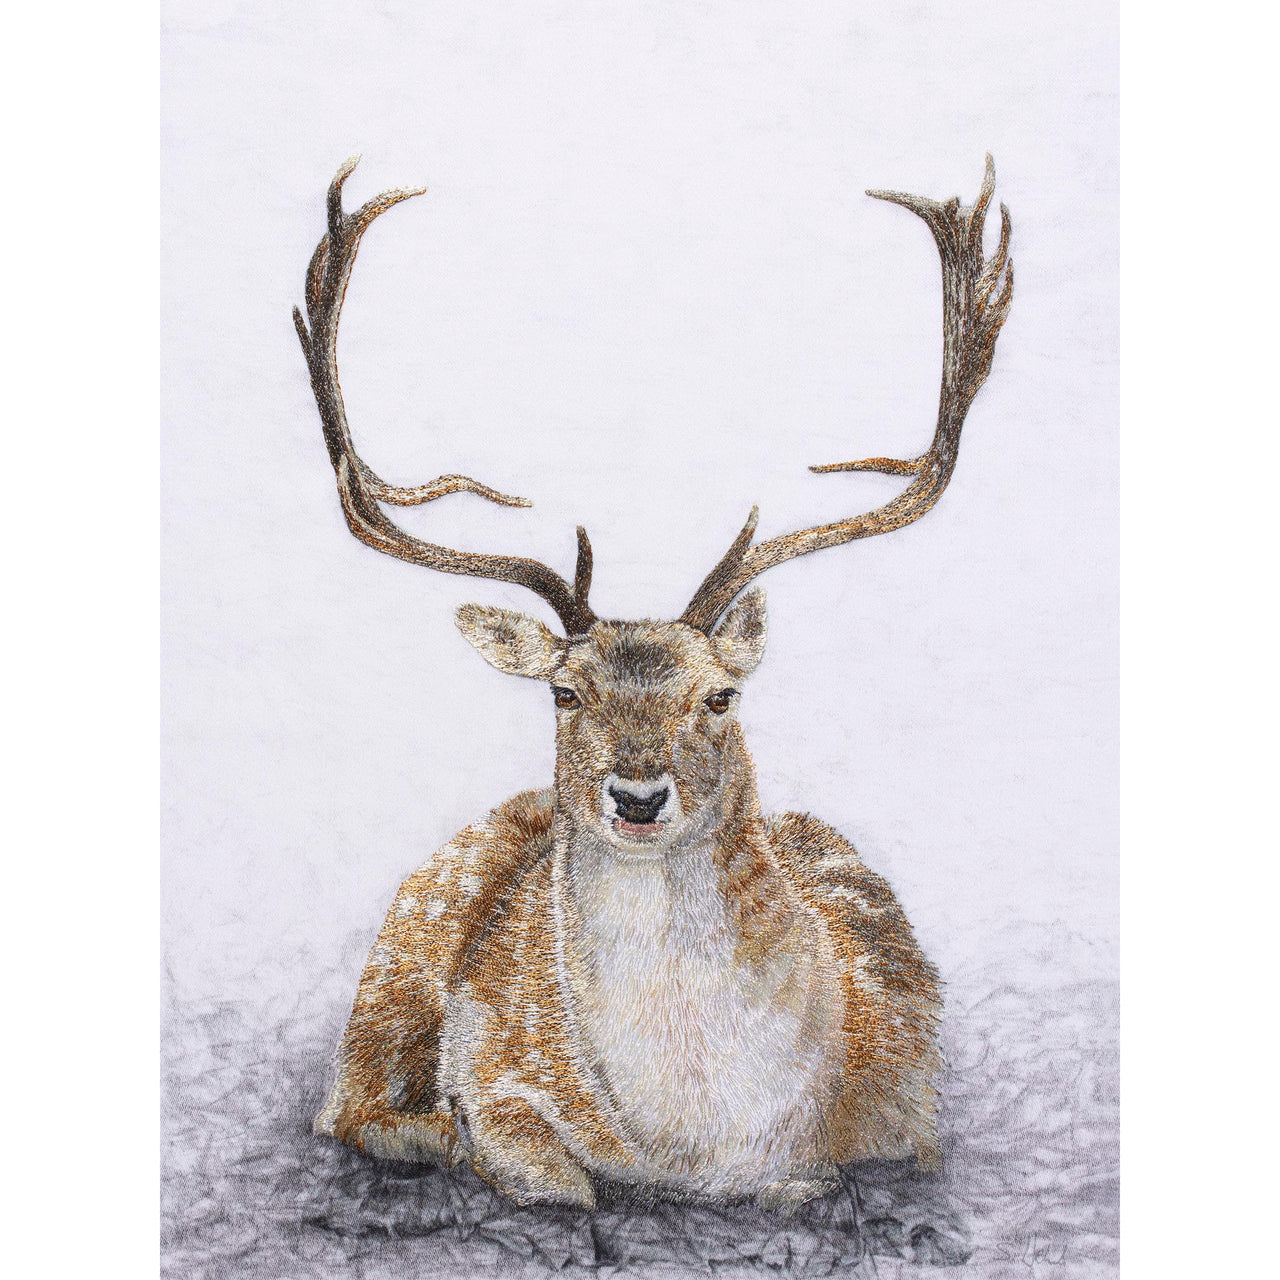 Sitting deer hand embroidered artwork